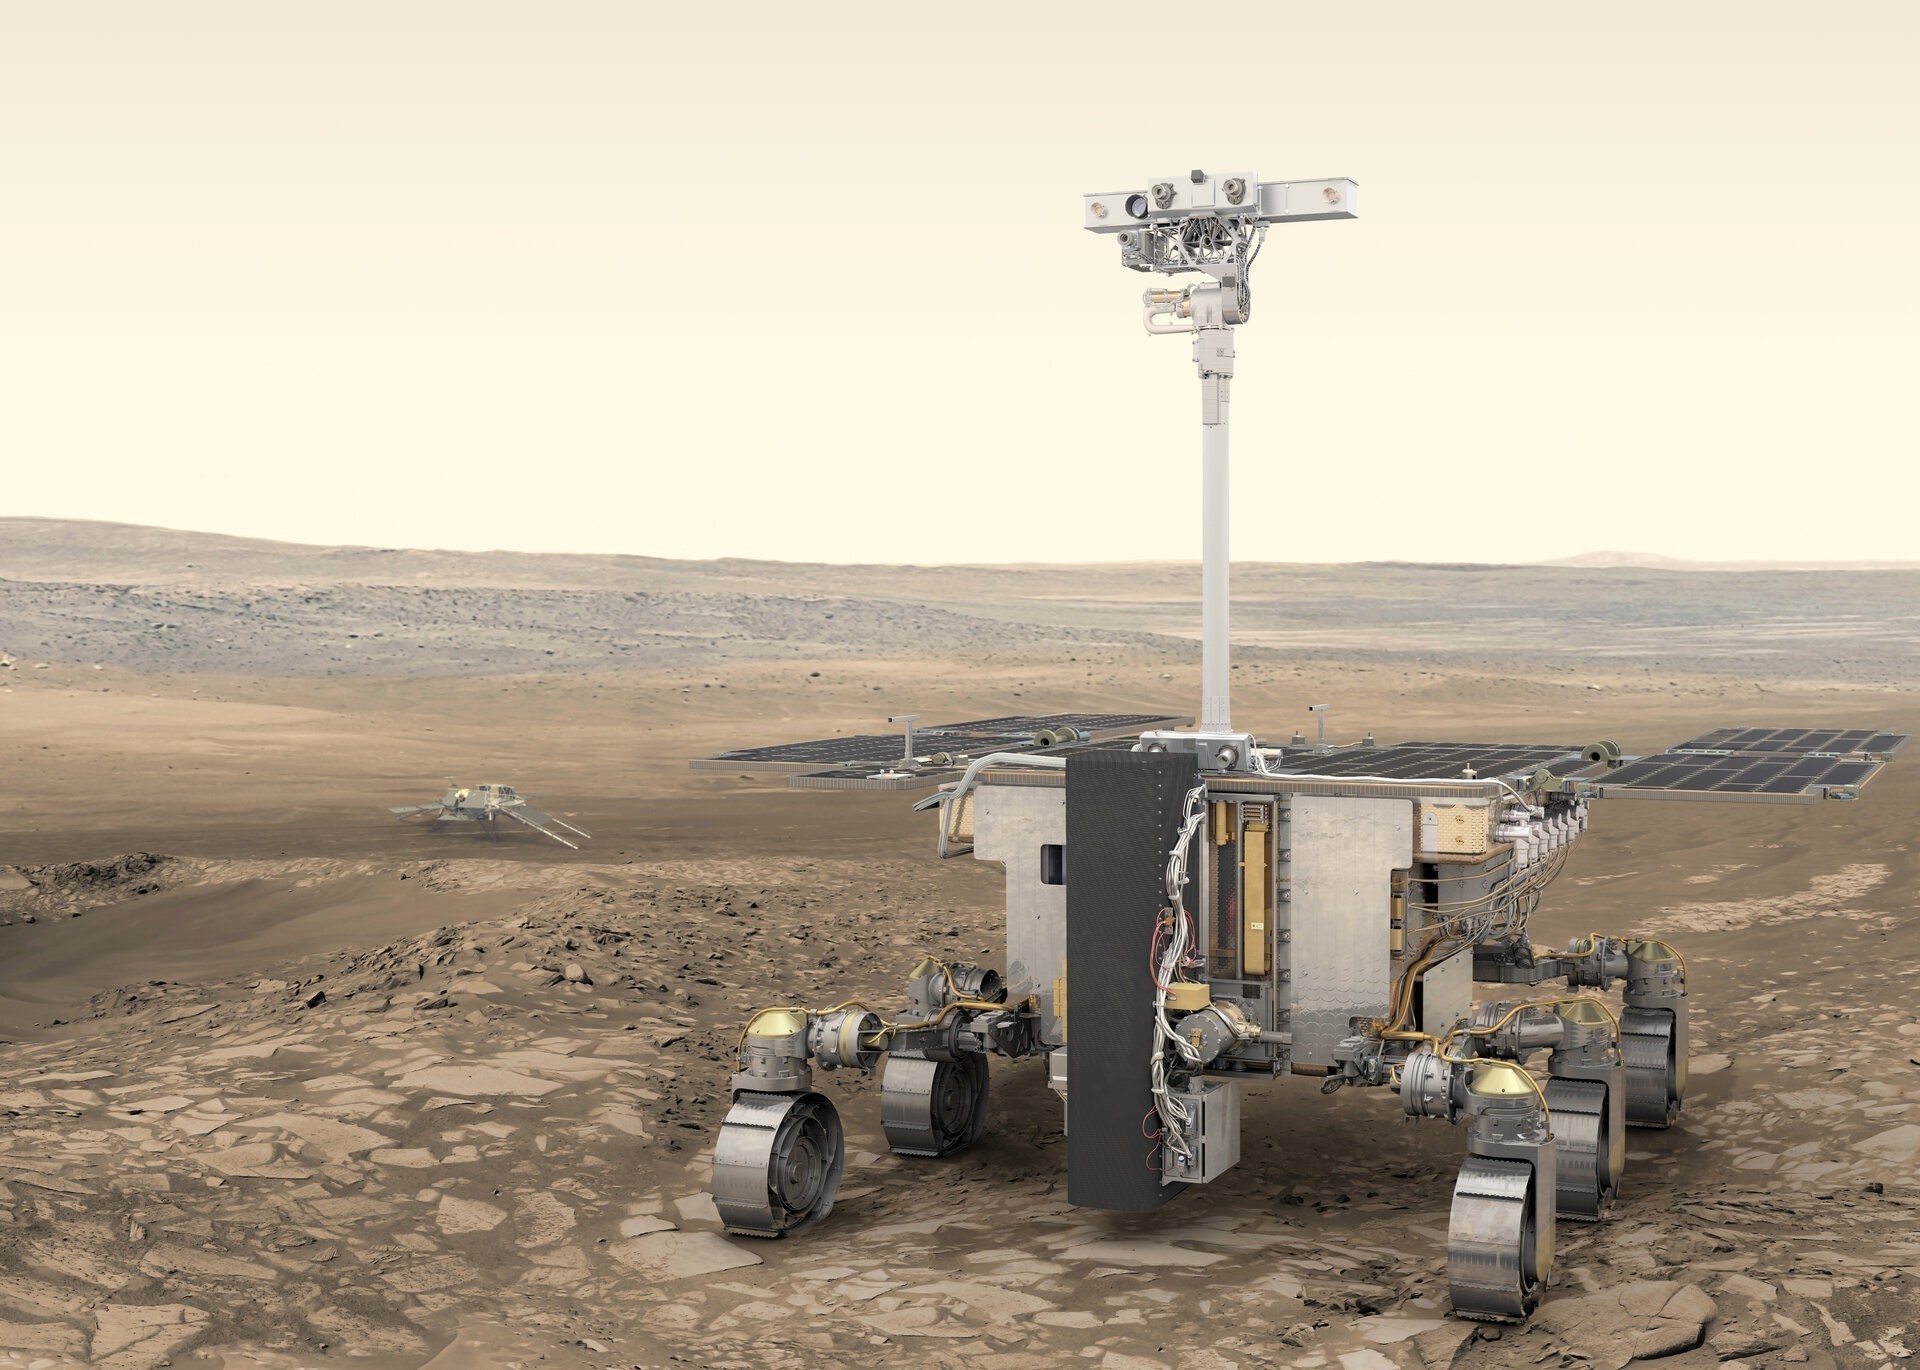 ESA: Η ευρω-ρωσική αποστολή ExoMars και η εκτόξευση του ρόβερ «Ρόσαλιντ Φράνκλιν» για τον Άρη είναι απίθανο να γίνει το 2022